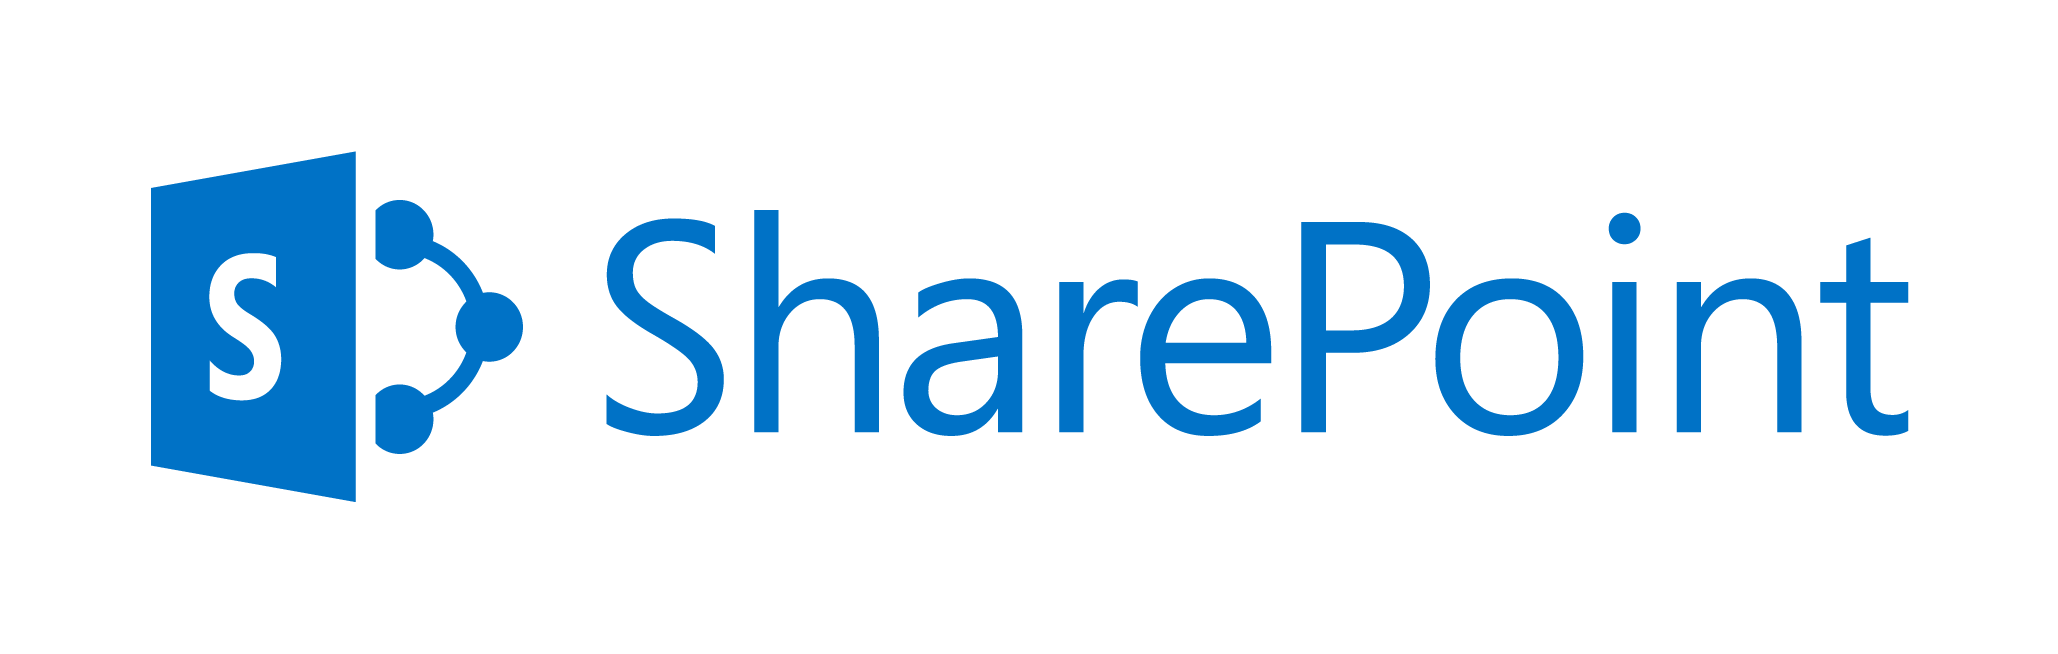 share-point-logo